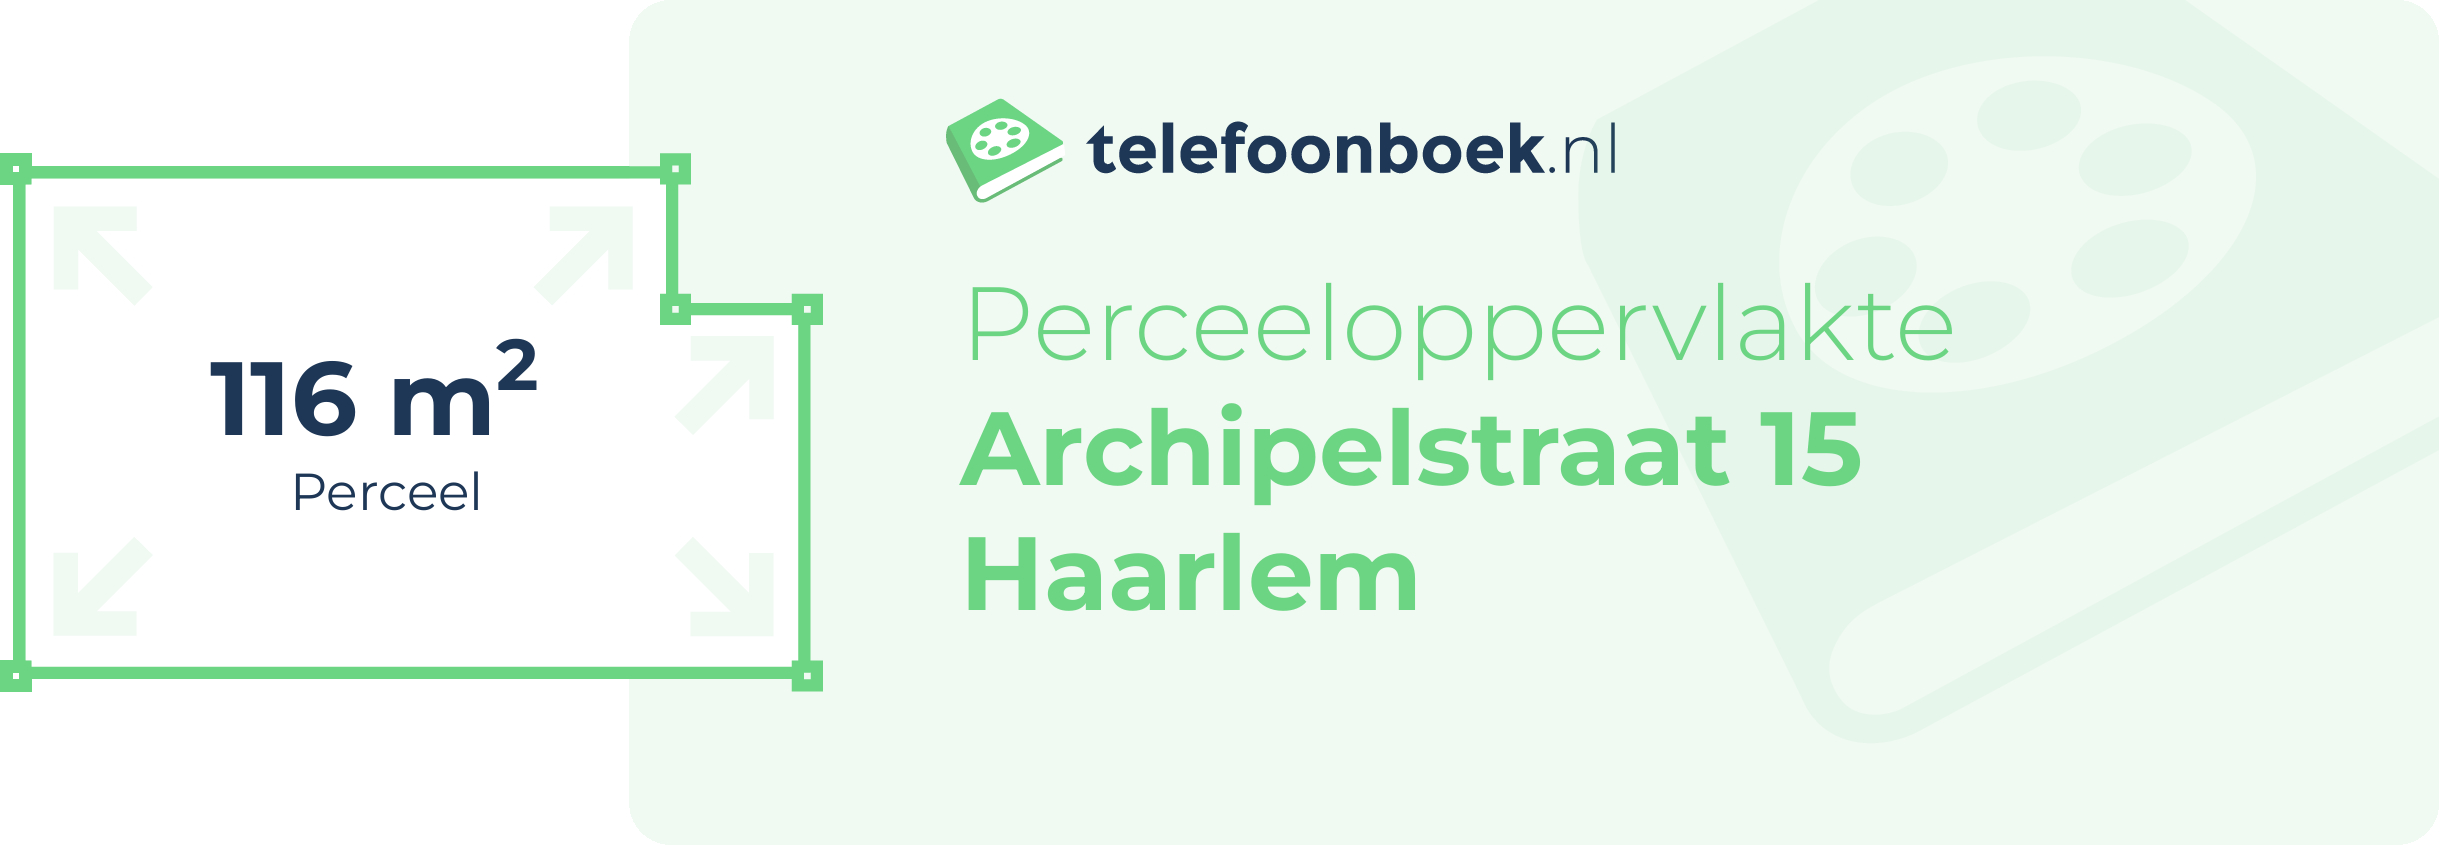 Perceeloppervlakte Archipelstraat 15 Haarlem